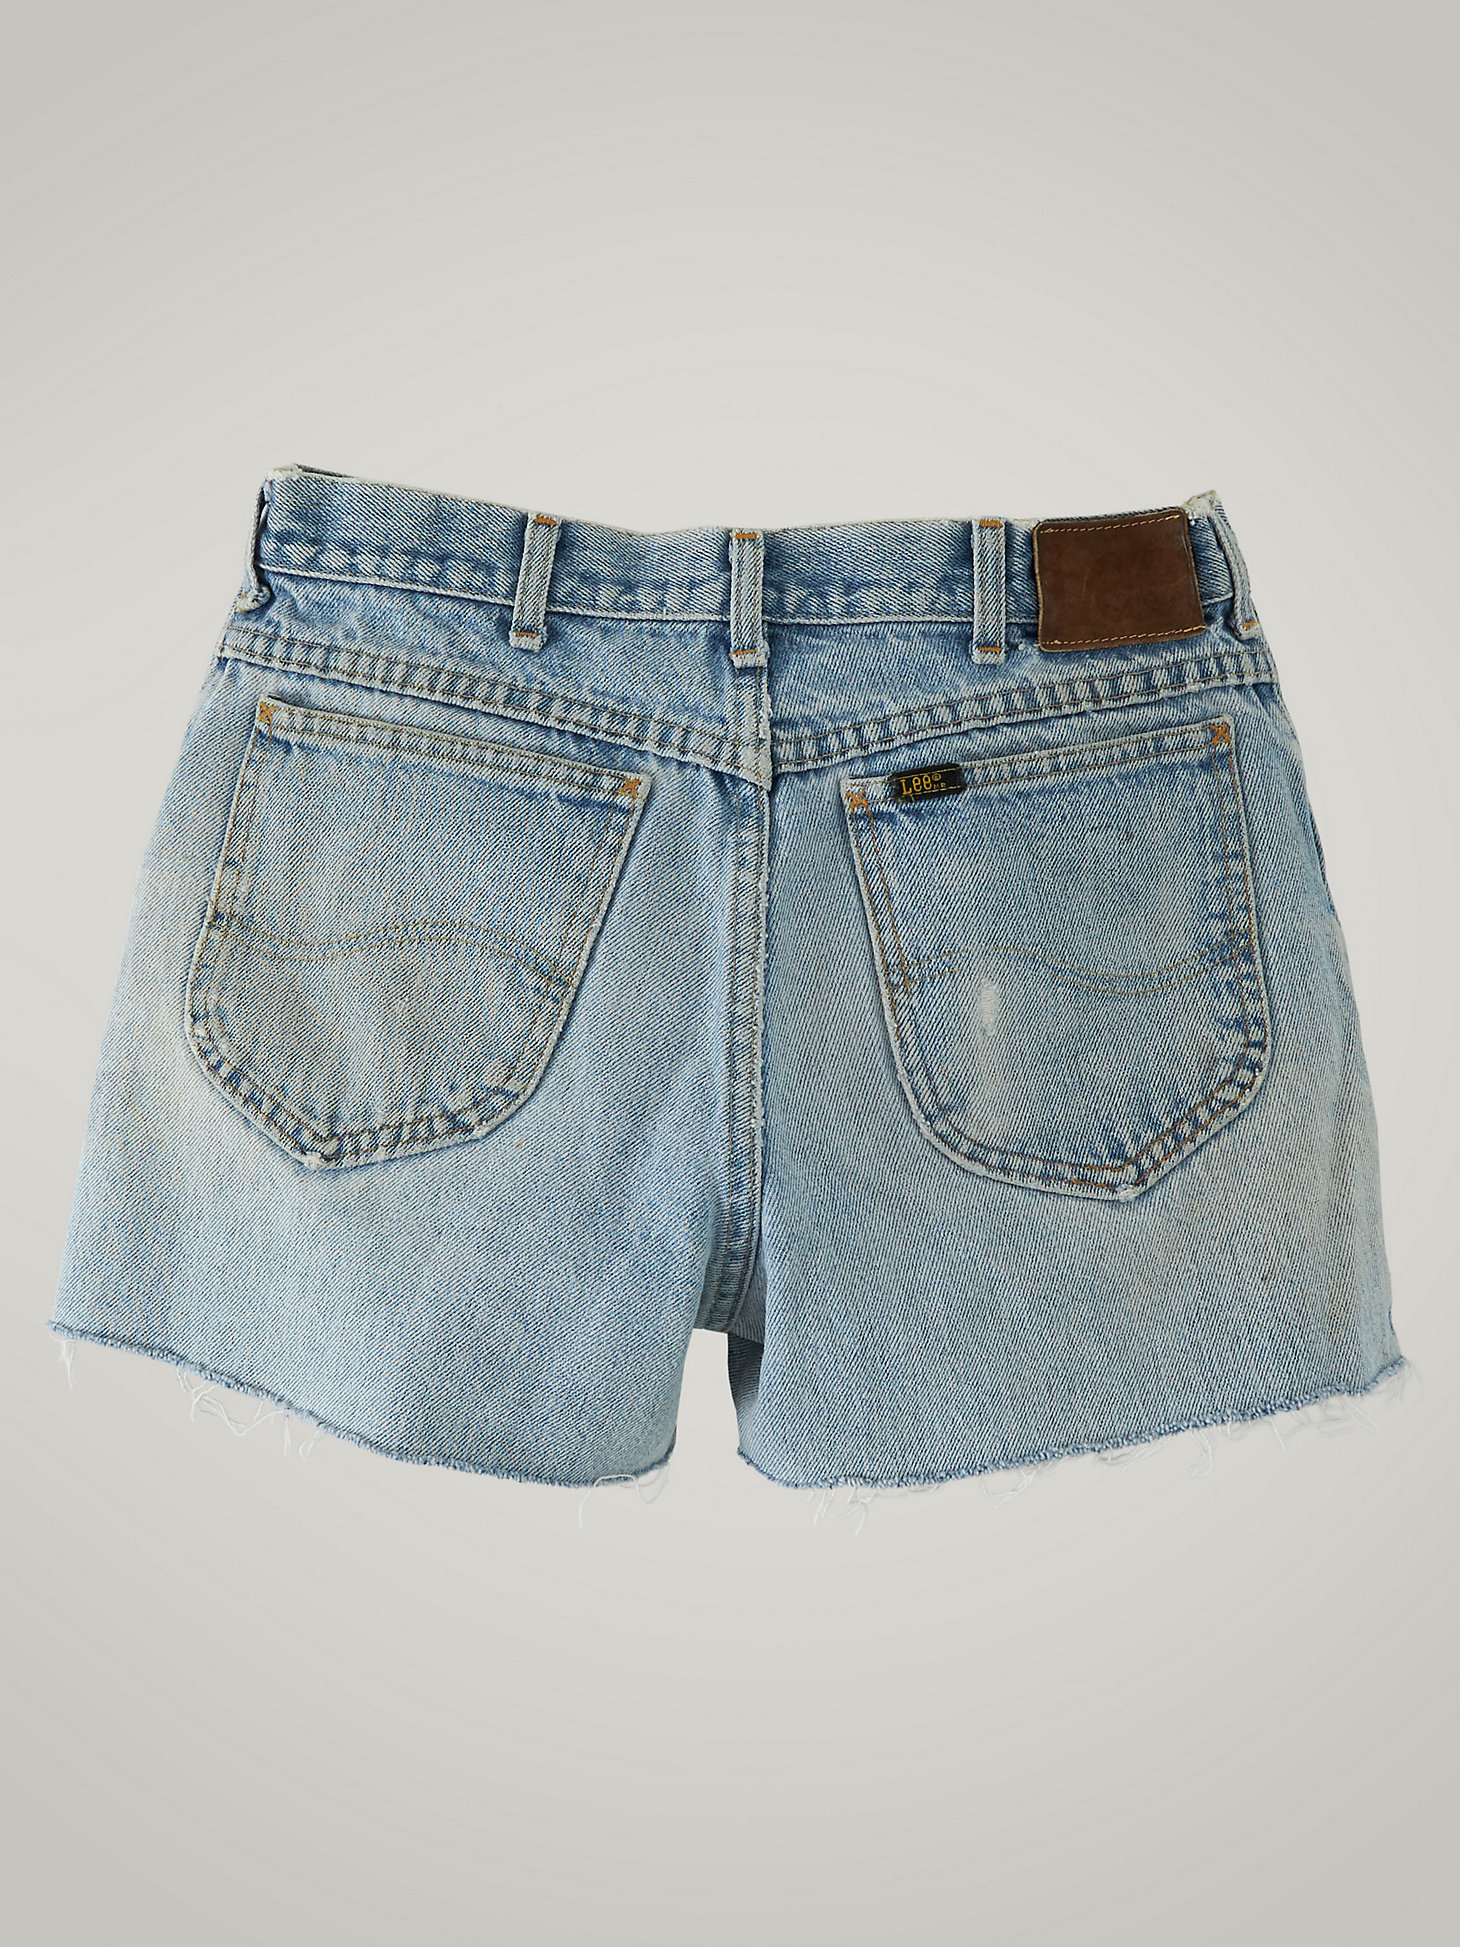 Women's Vintage Cut-Off Shorts WS19 (Size 30) in Light Denm alternative view 1